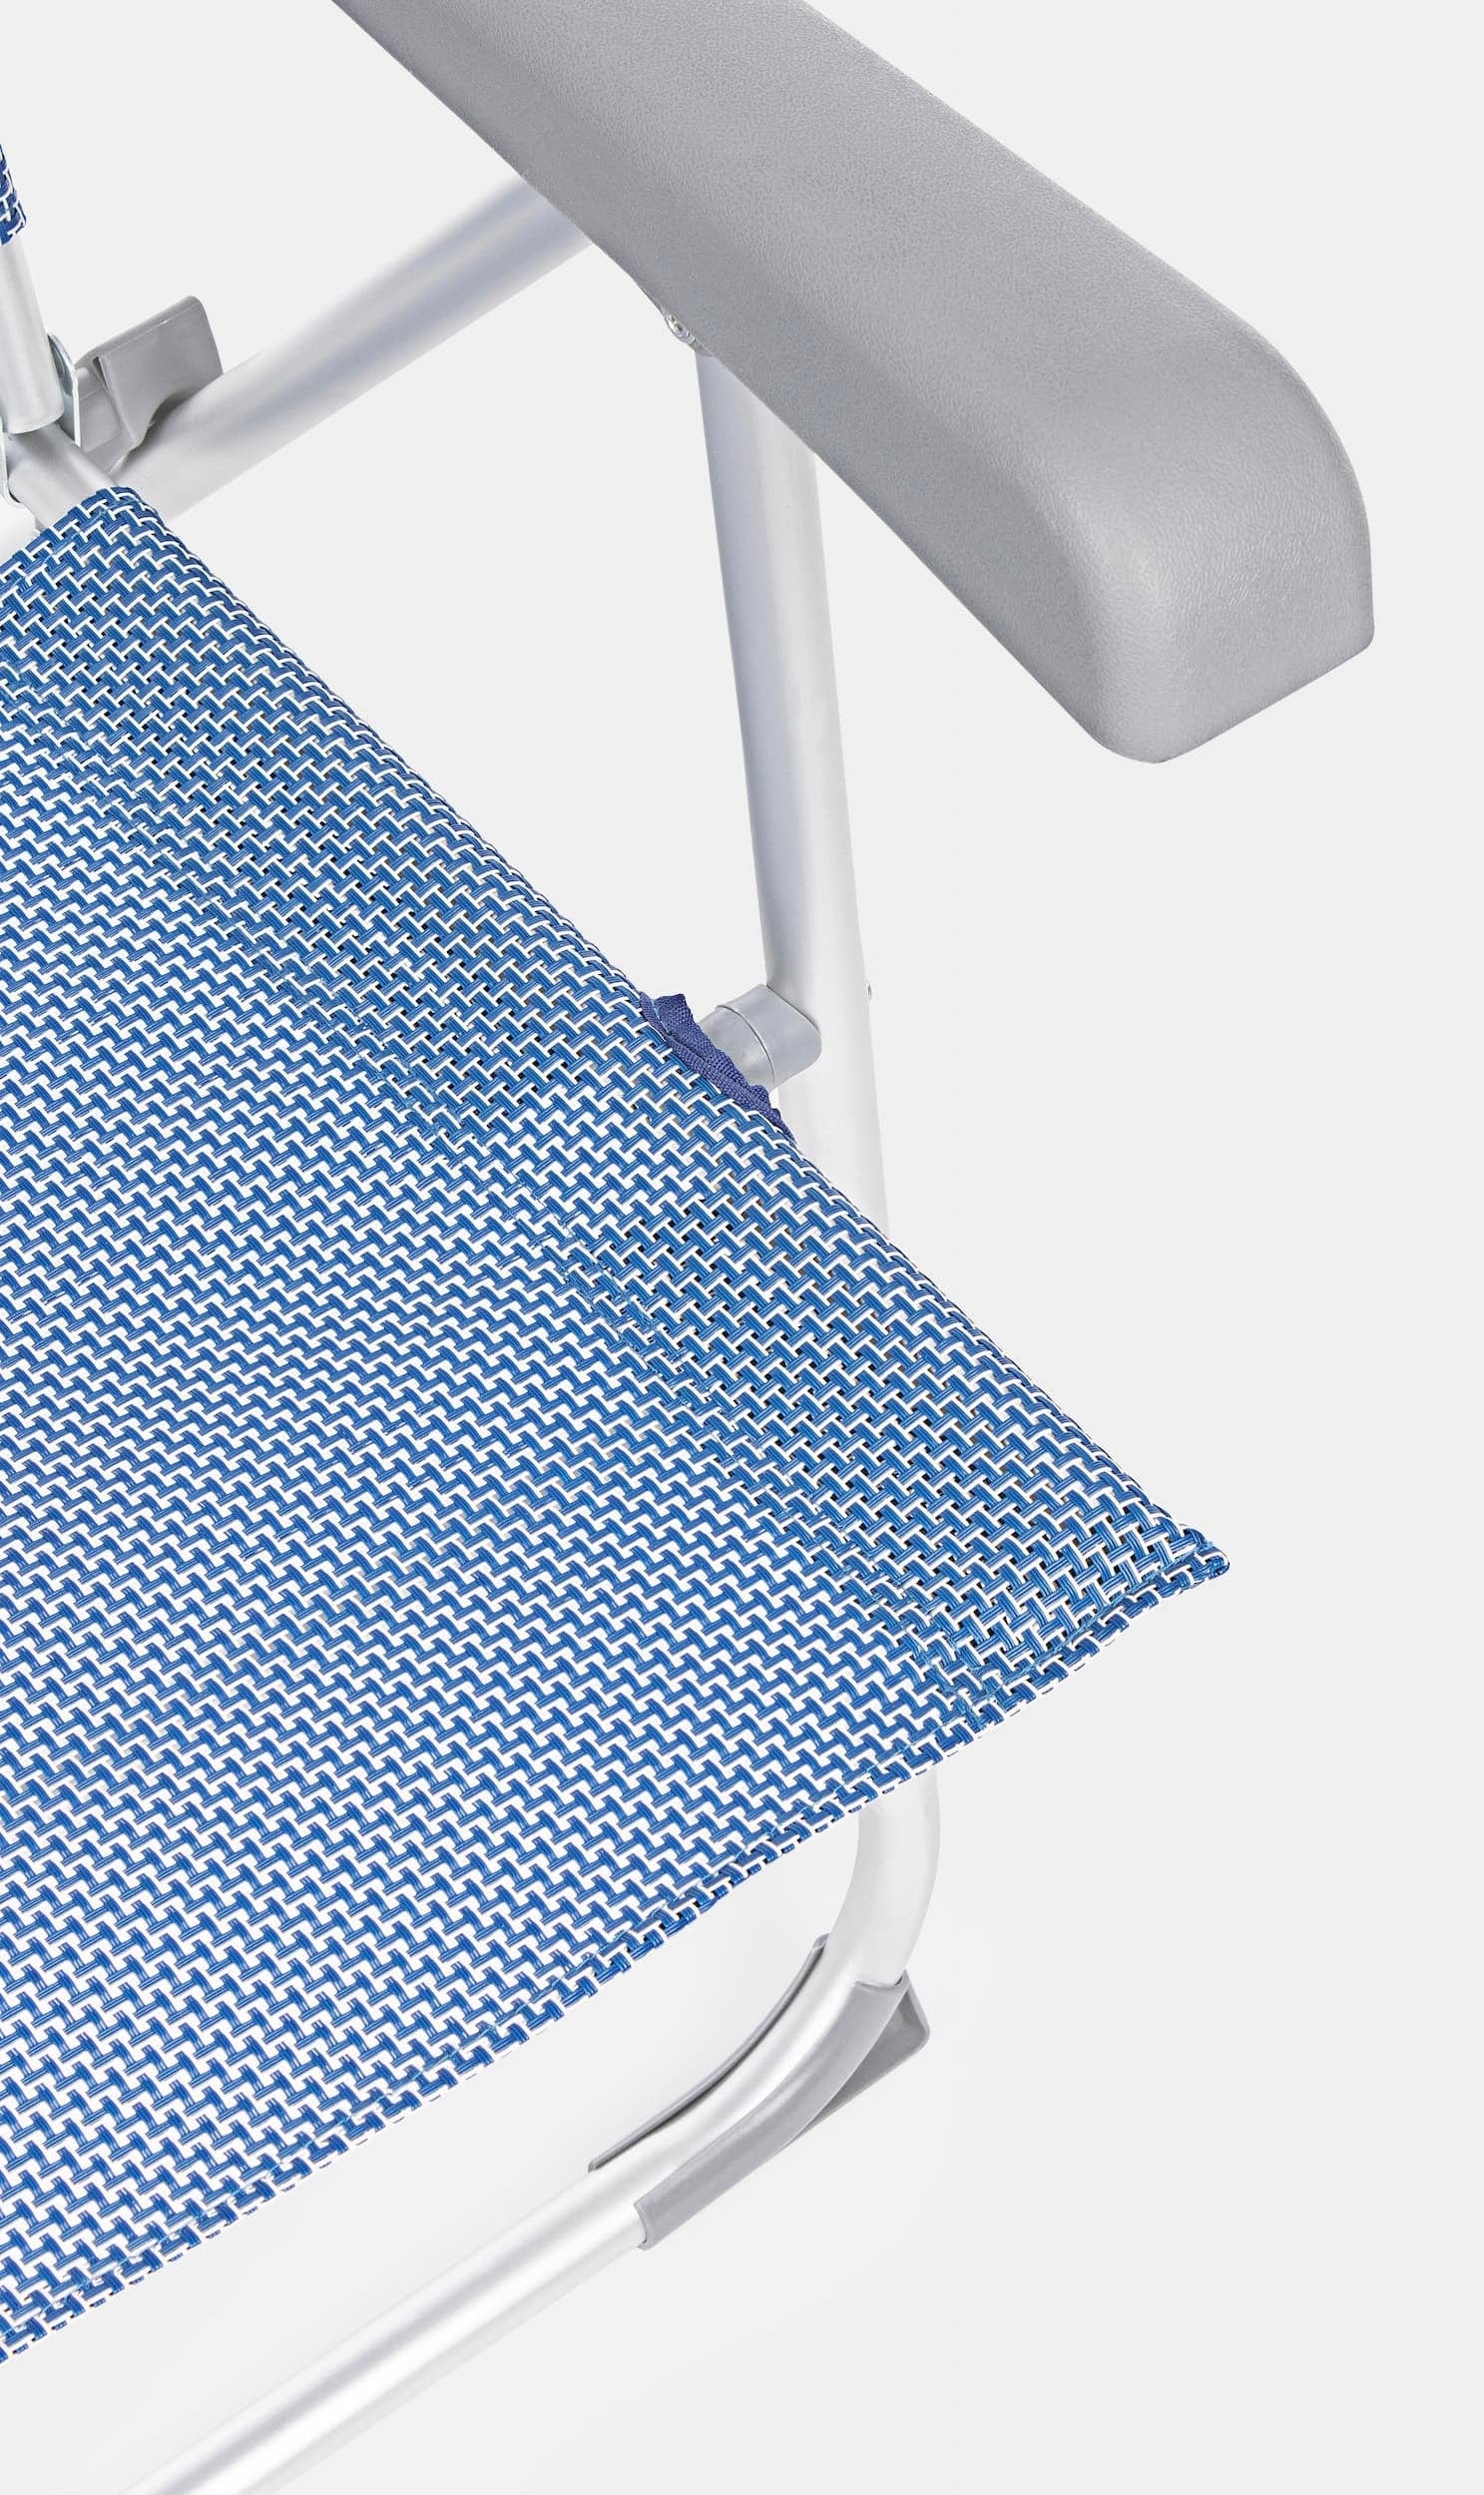 Scaun pliabil pentru terasa / plaja, din aluminiu si material textil, Cross High Alb / Albastru, l58xA62,5xH110 cm (7)